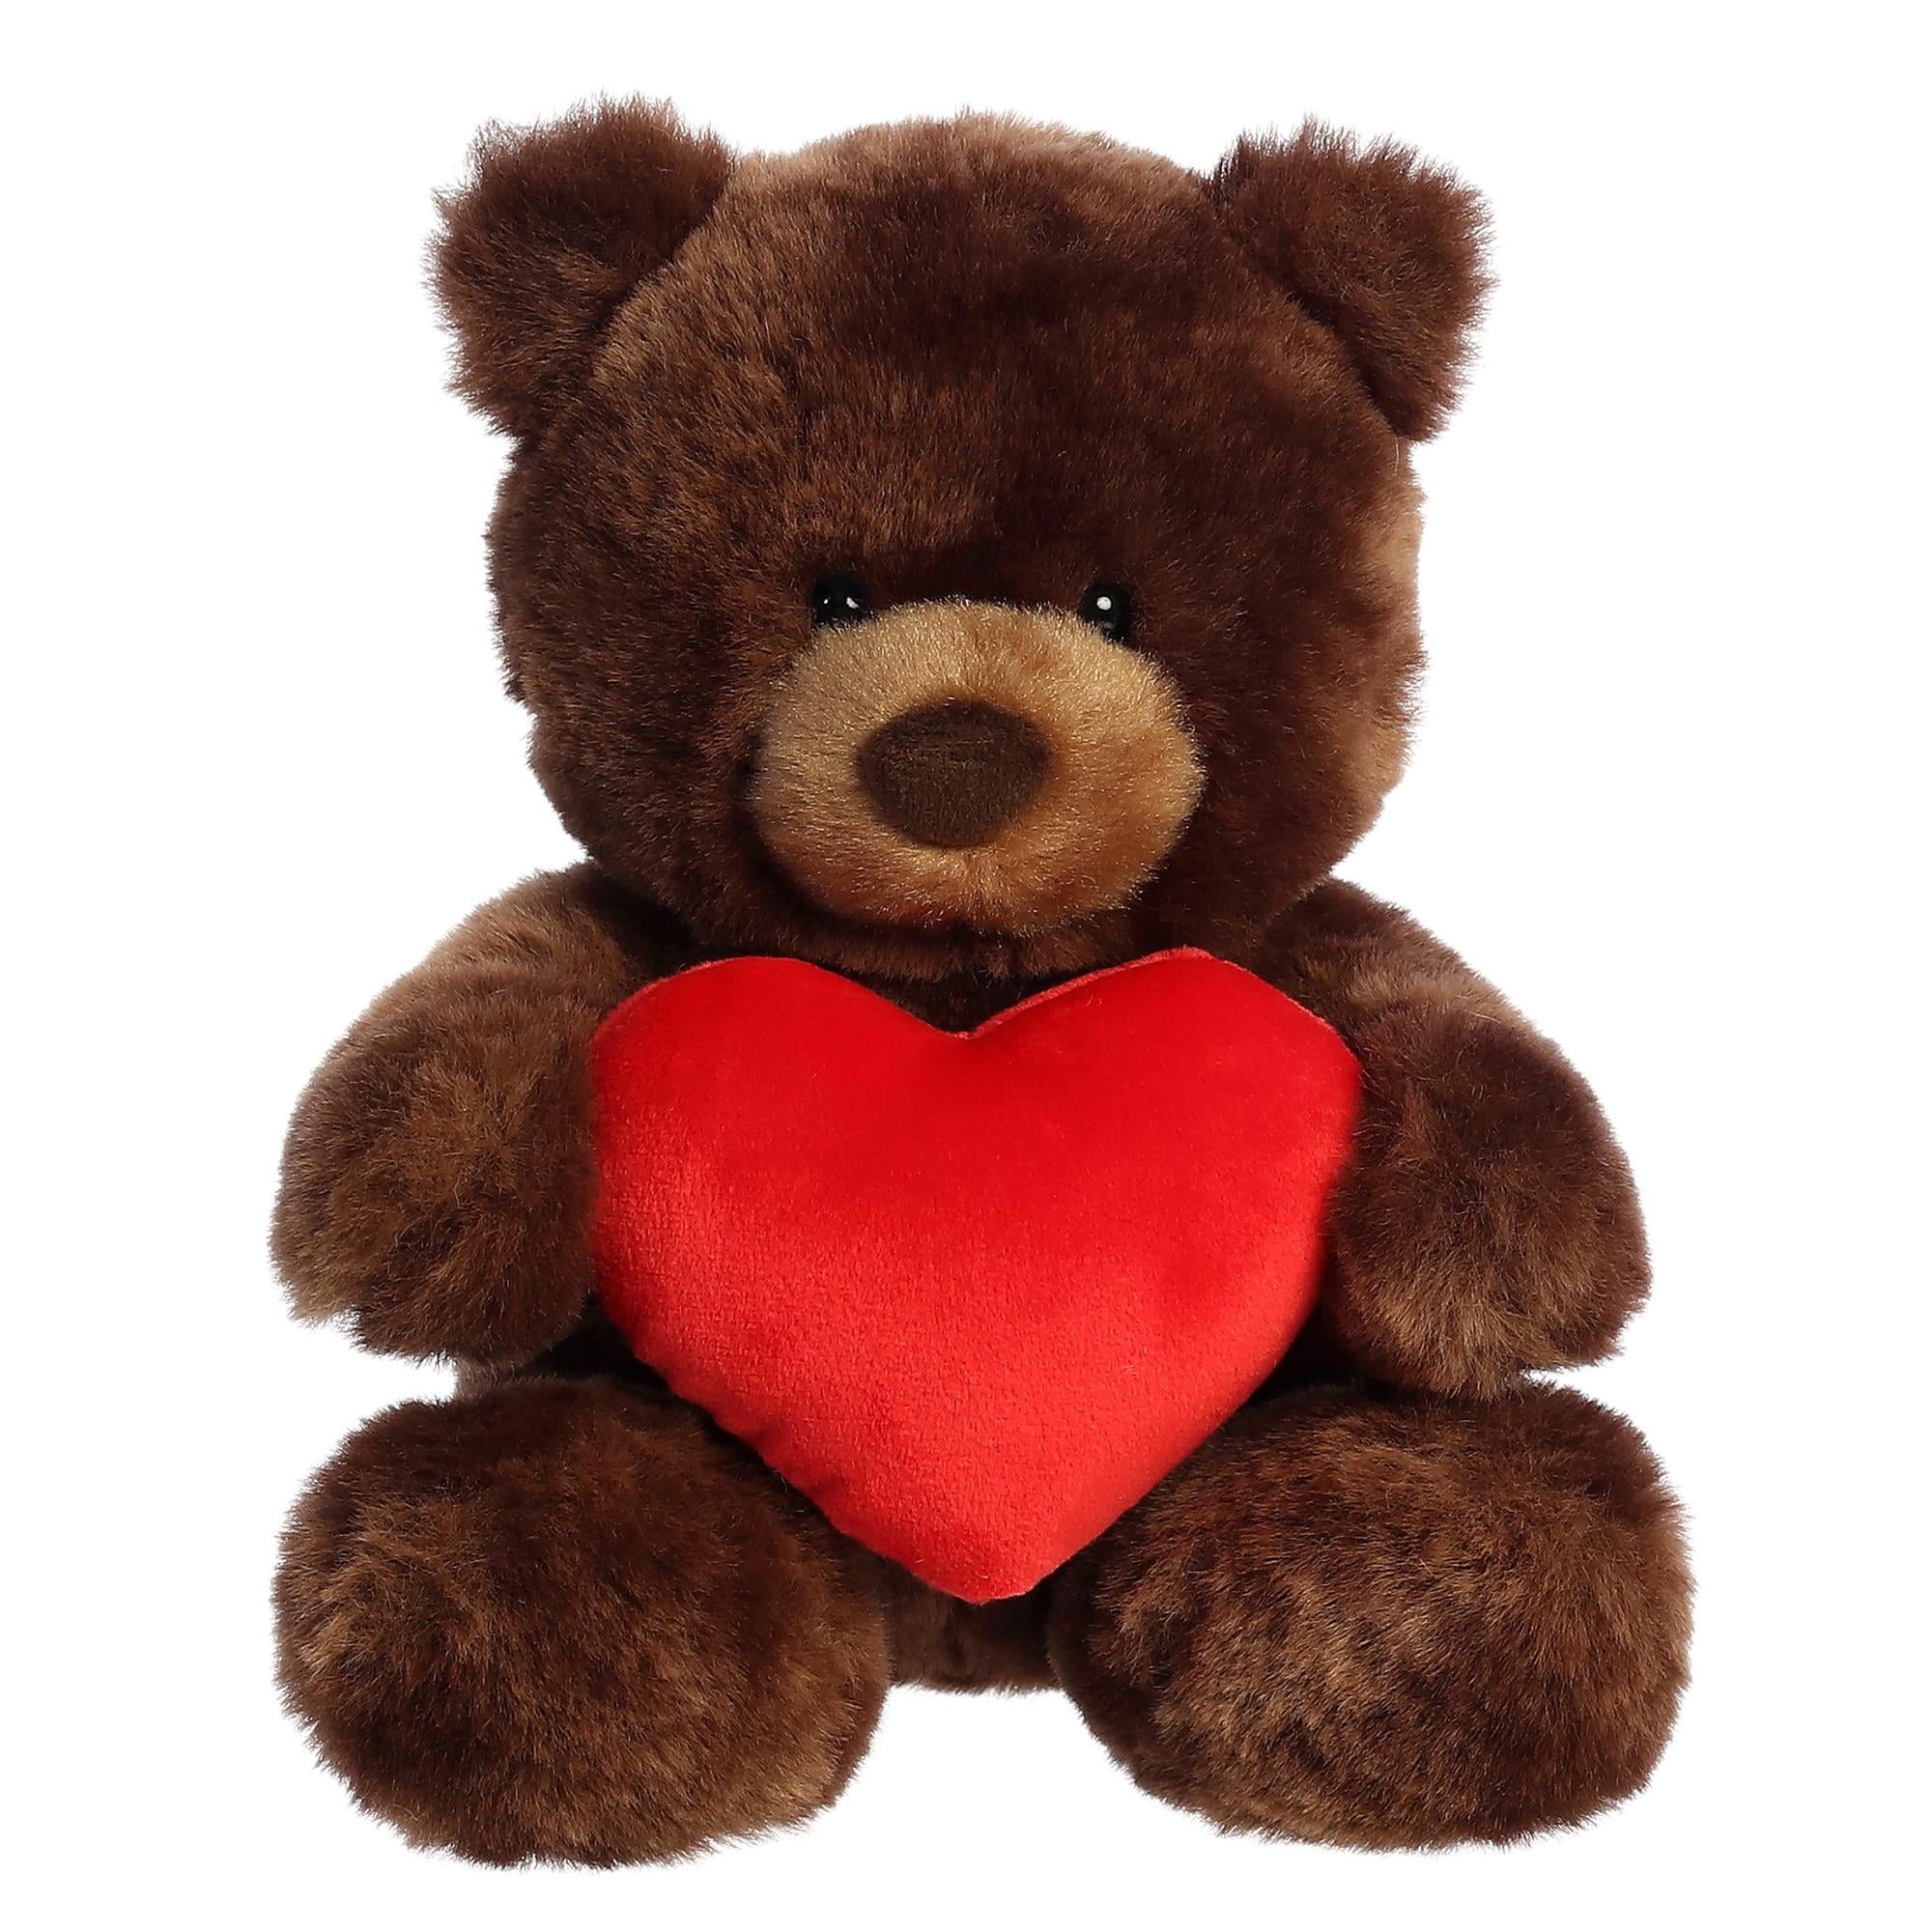 Aurora Valentine Bear 50231  15" NWT A Classic Bear at a special price0929435023 